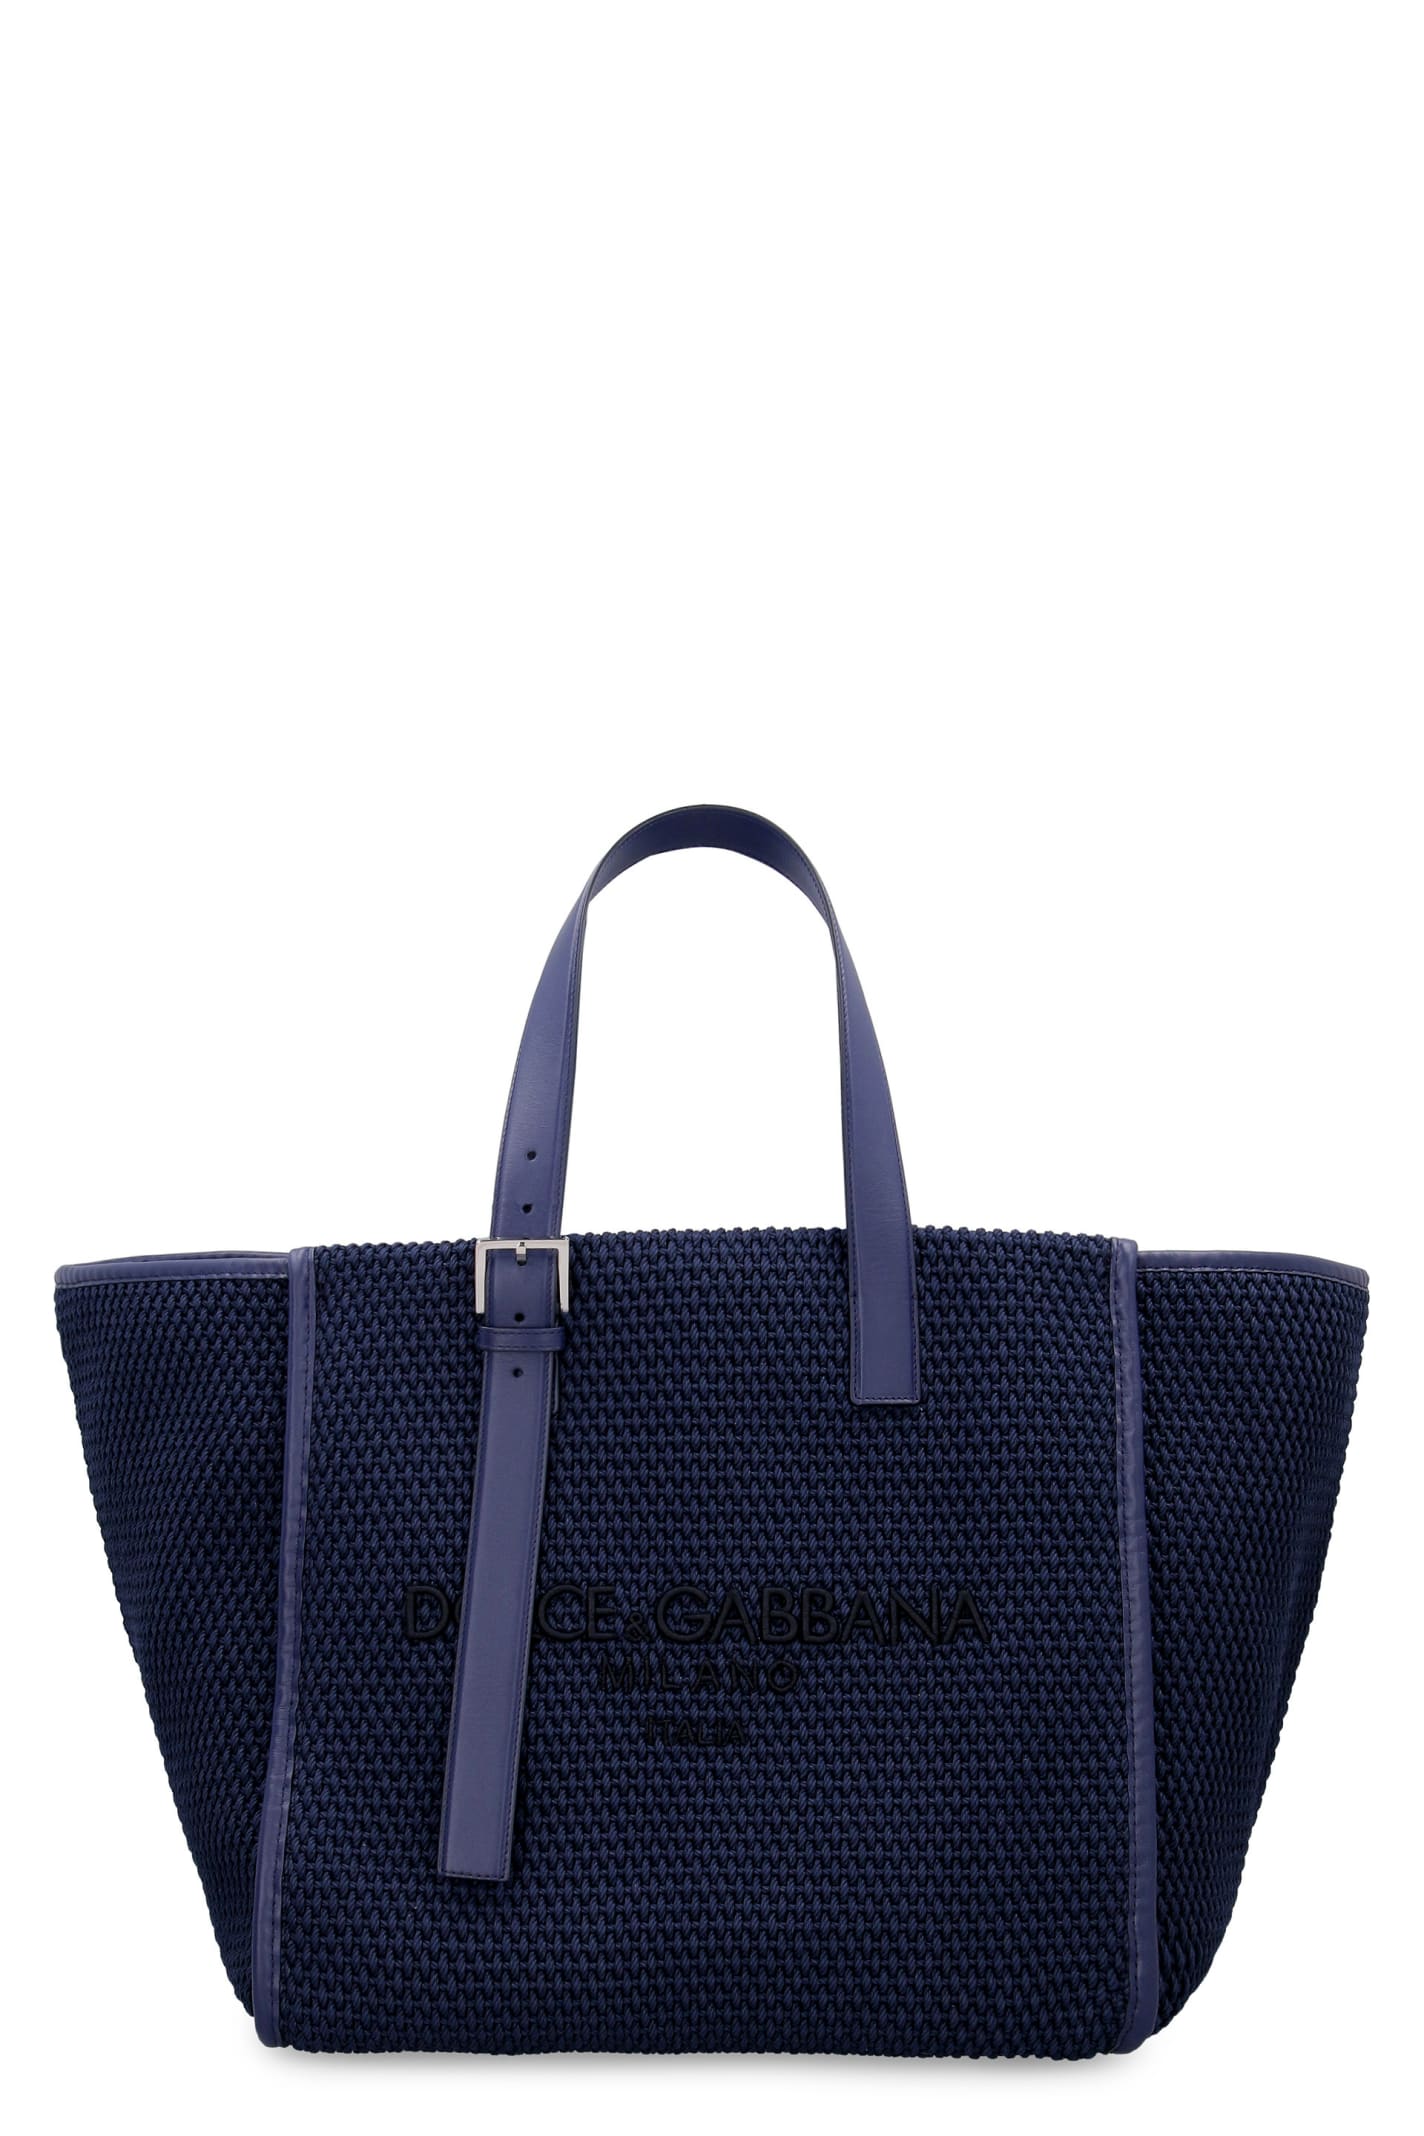 Dolce & Gabbana Maxi Tote Bag